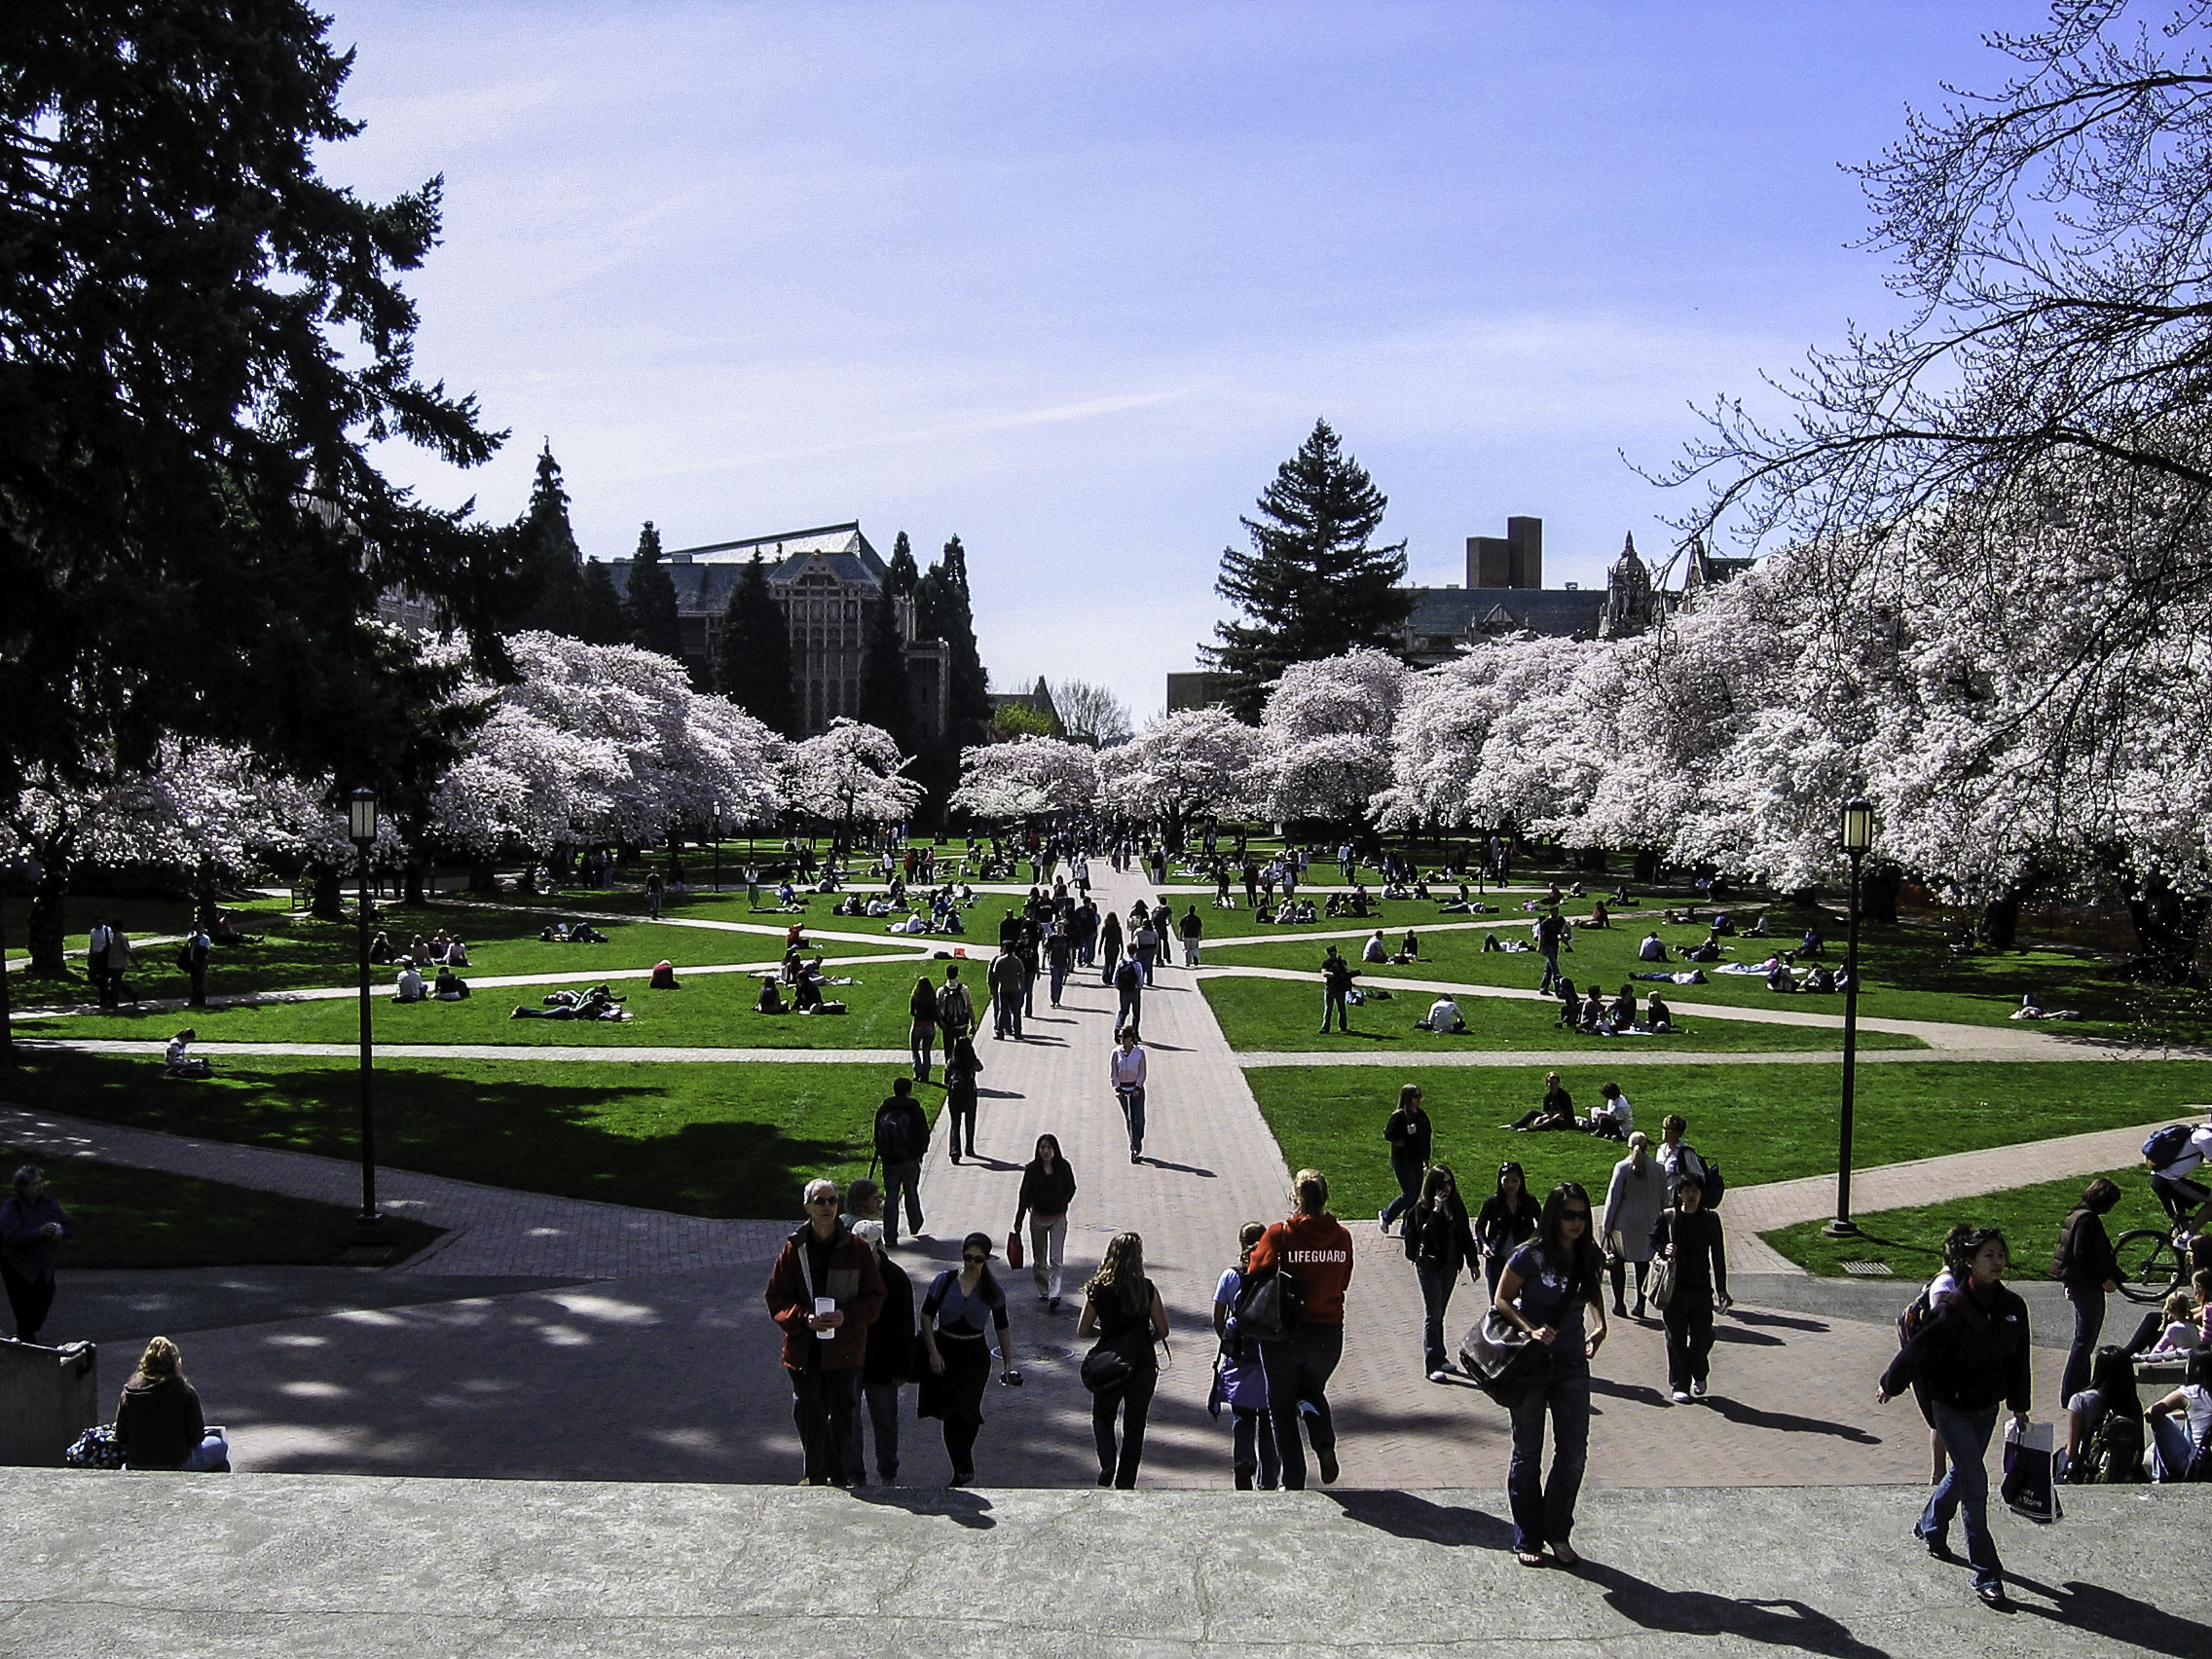 "University of Washington quad in spring in Seattle" copyright CC0 from goodfreephotos.com